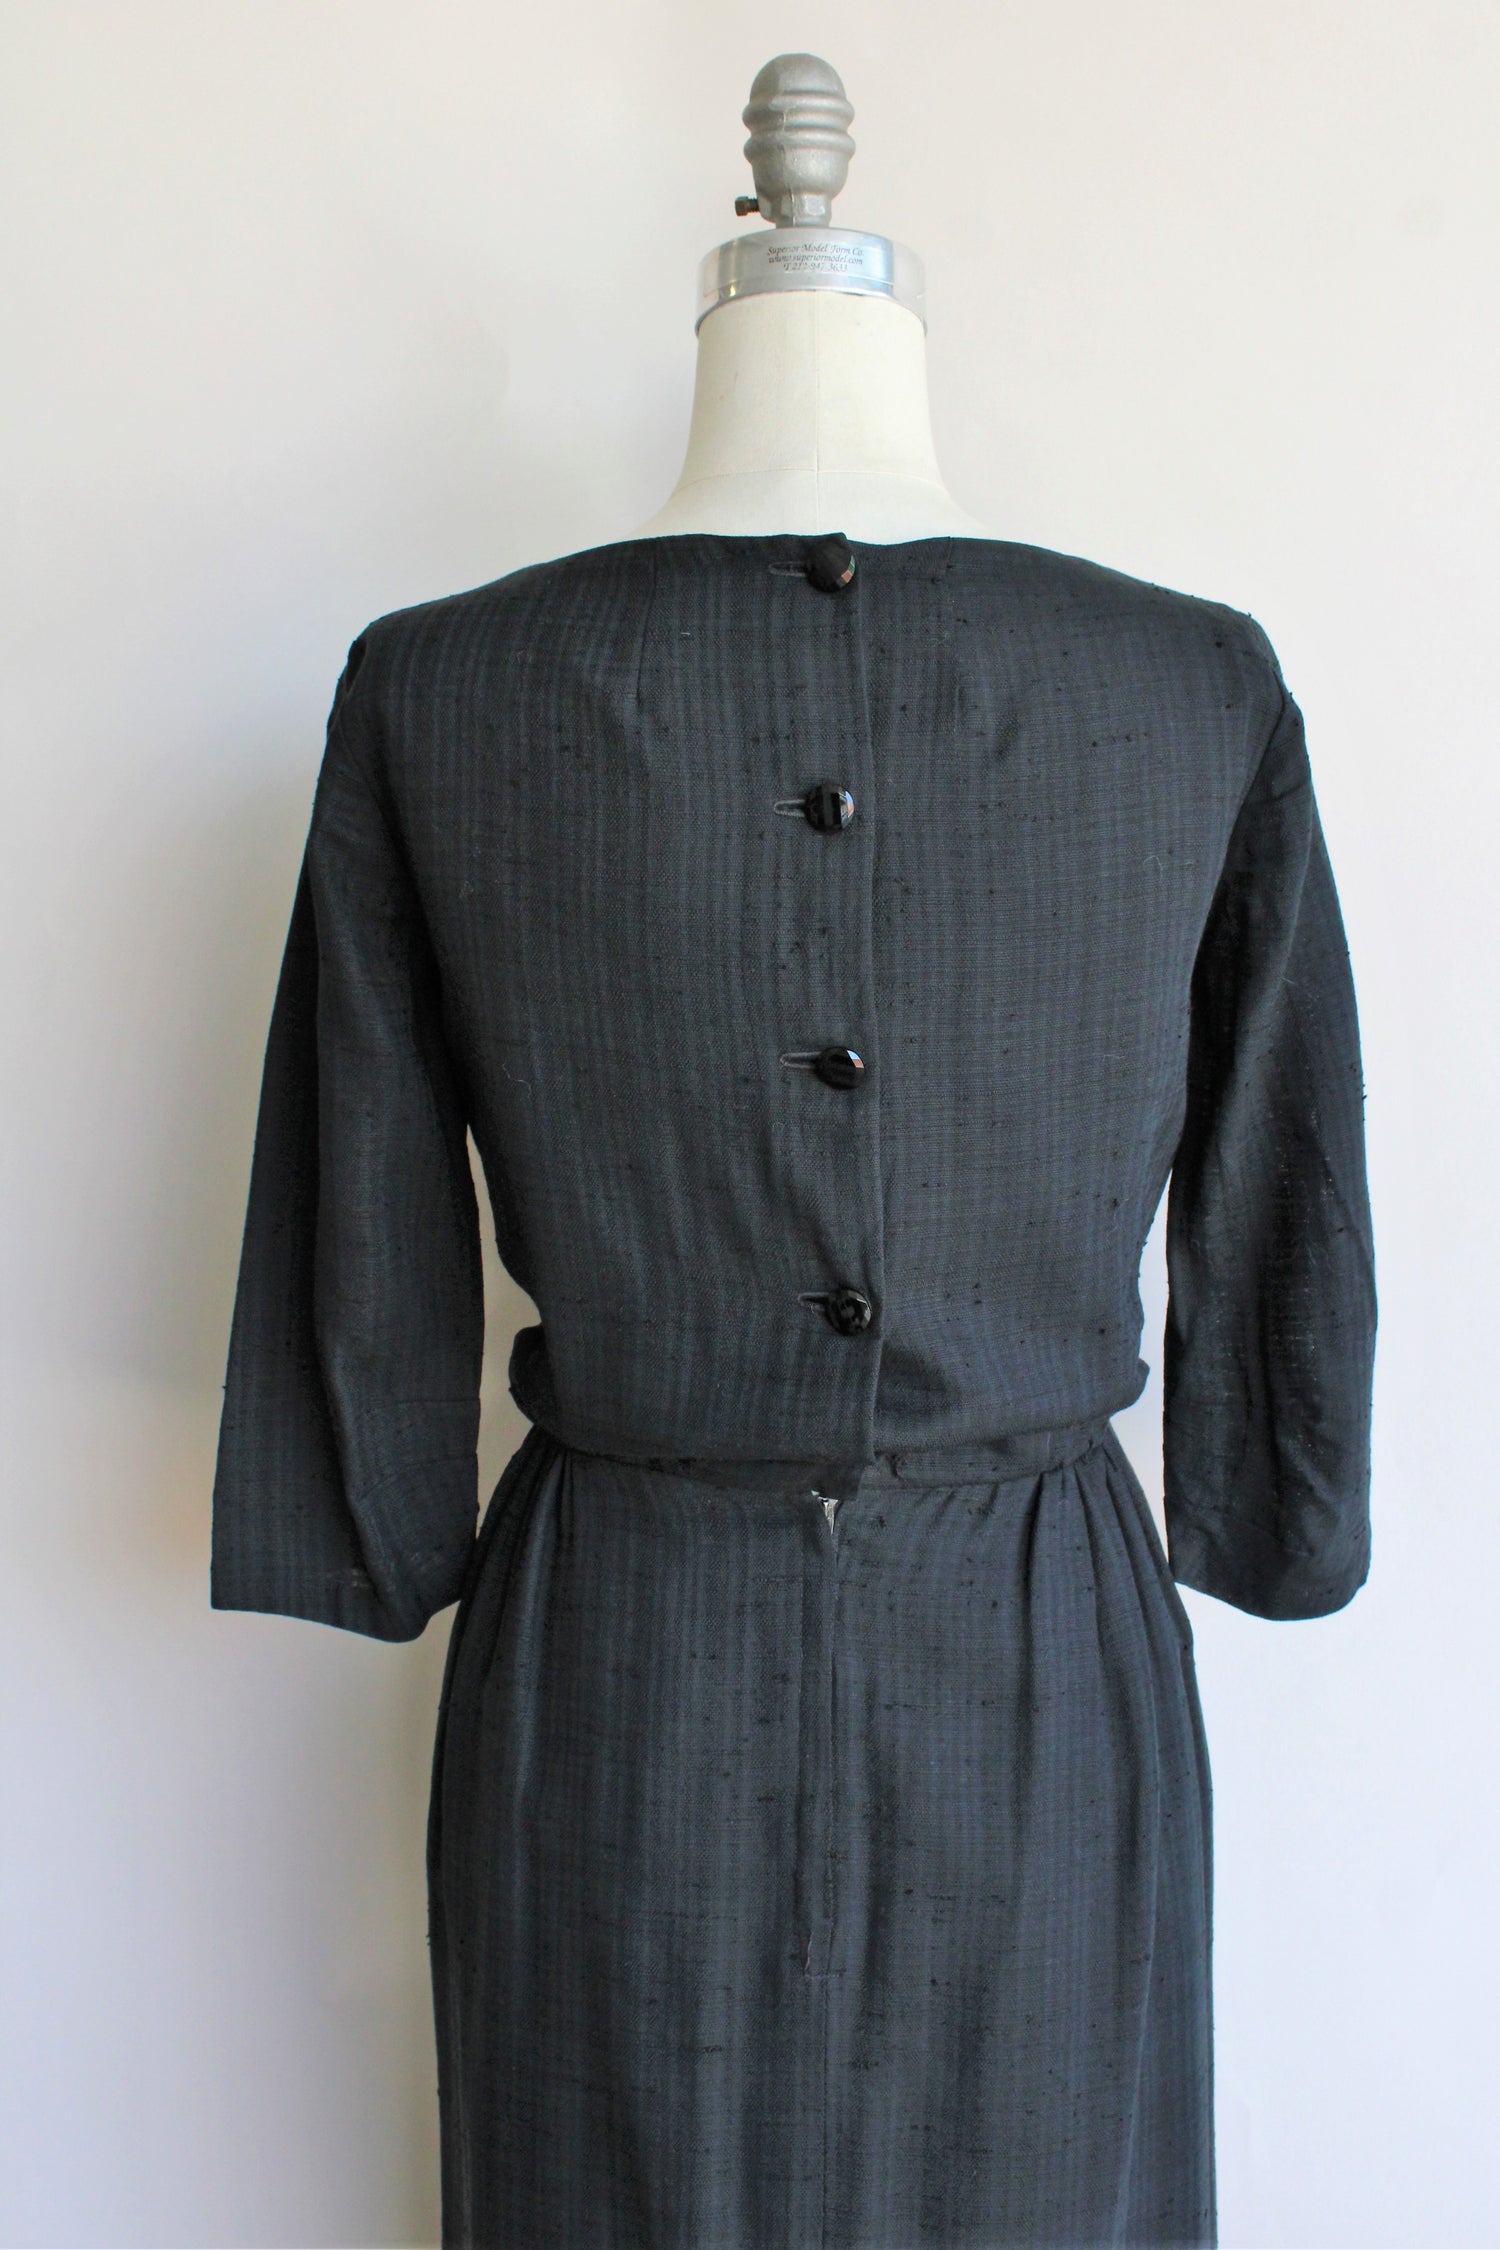 Vintage 1960s Black Sheath Dress with Button Back